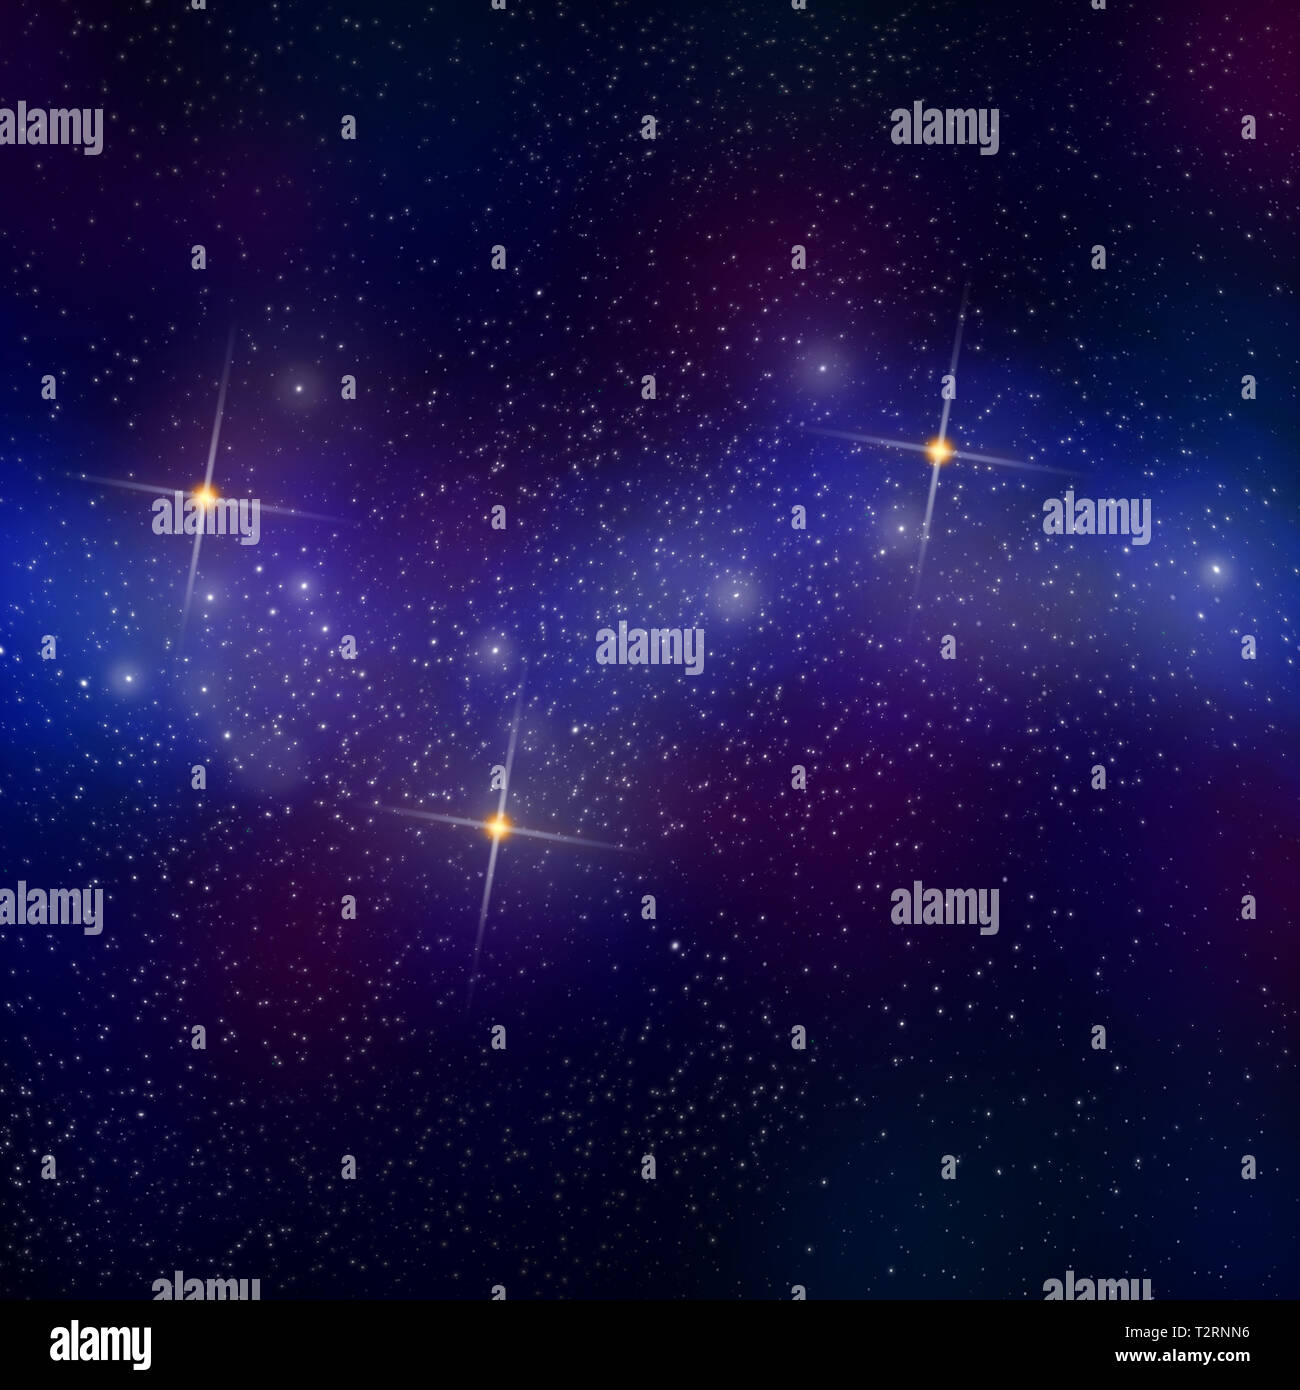 Star field including nebula and interstellar gases. Stock Photo